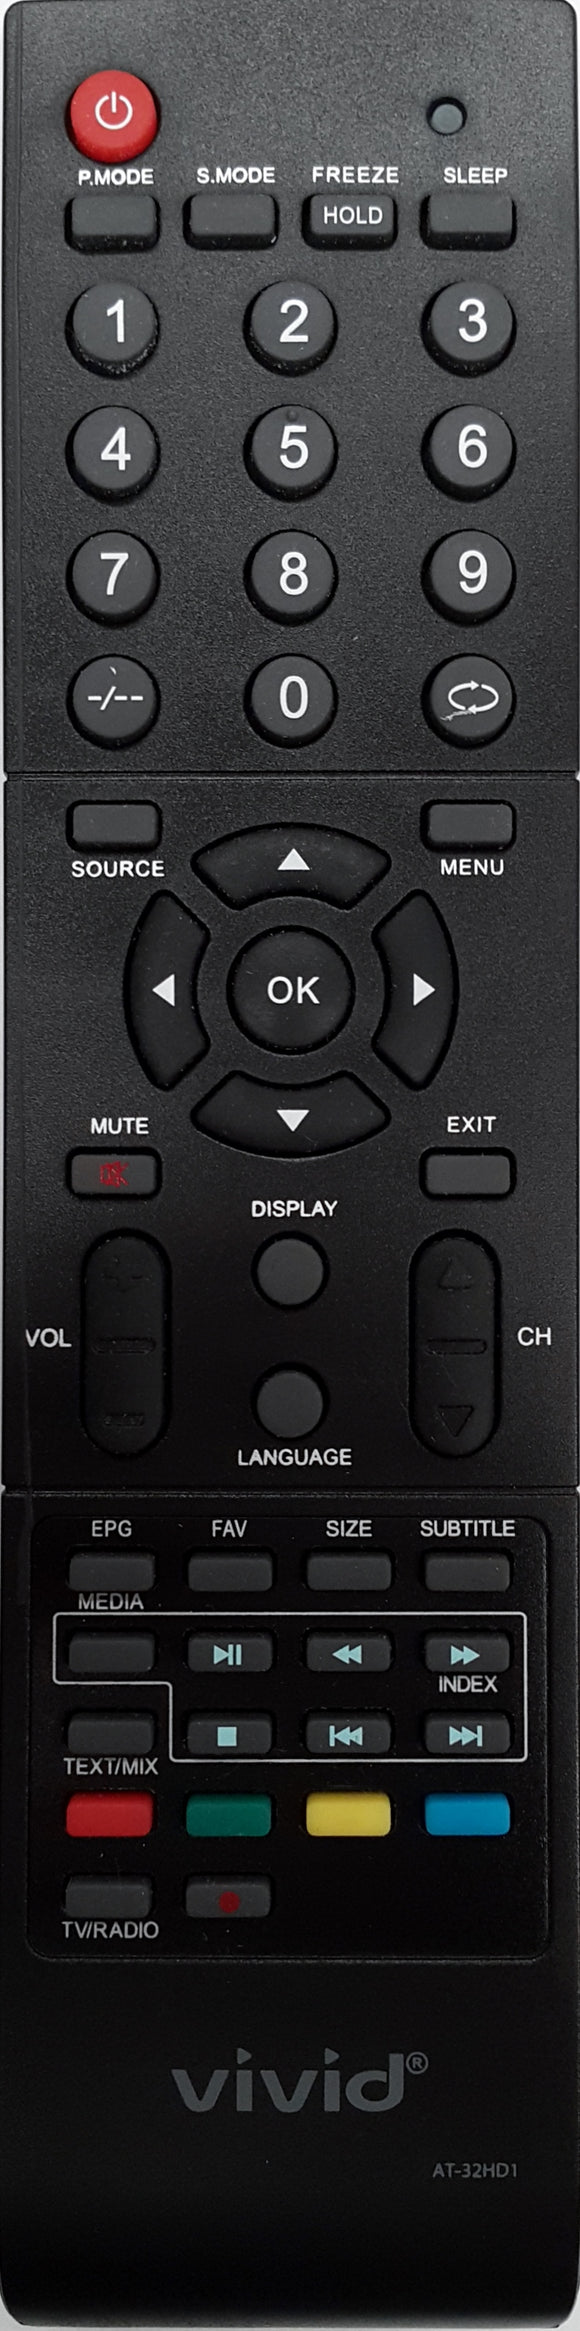 ORIGINAL VIVID REMOTE CONTROL - AT32HD1 LCD  TV - Remote Control Warehouse